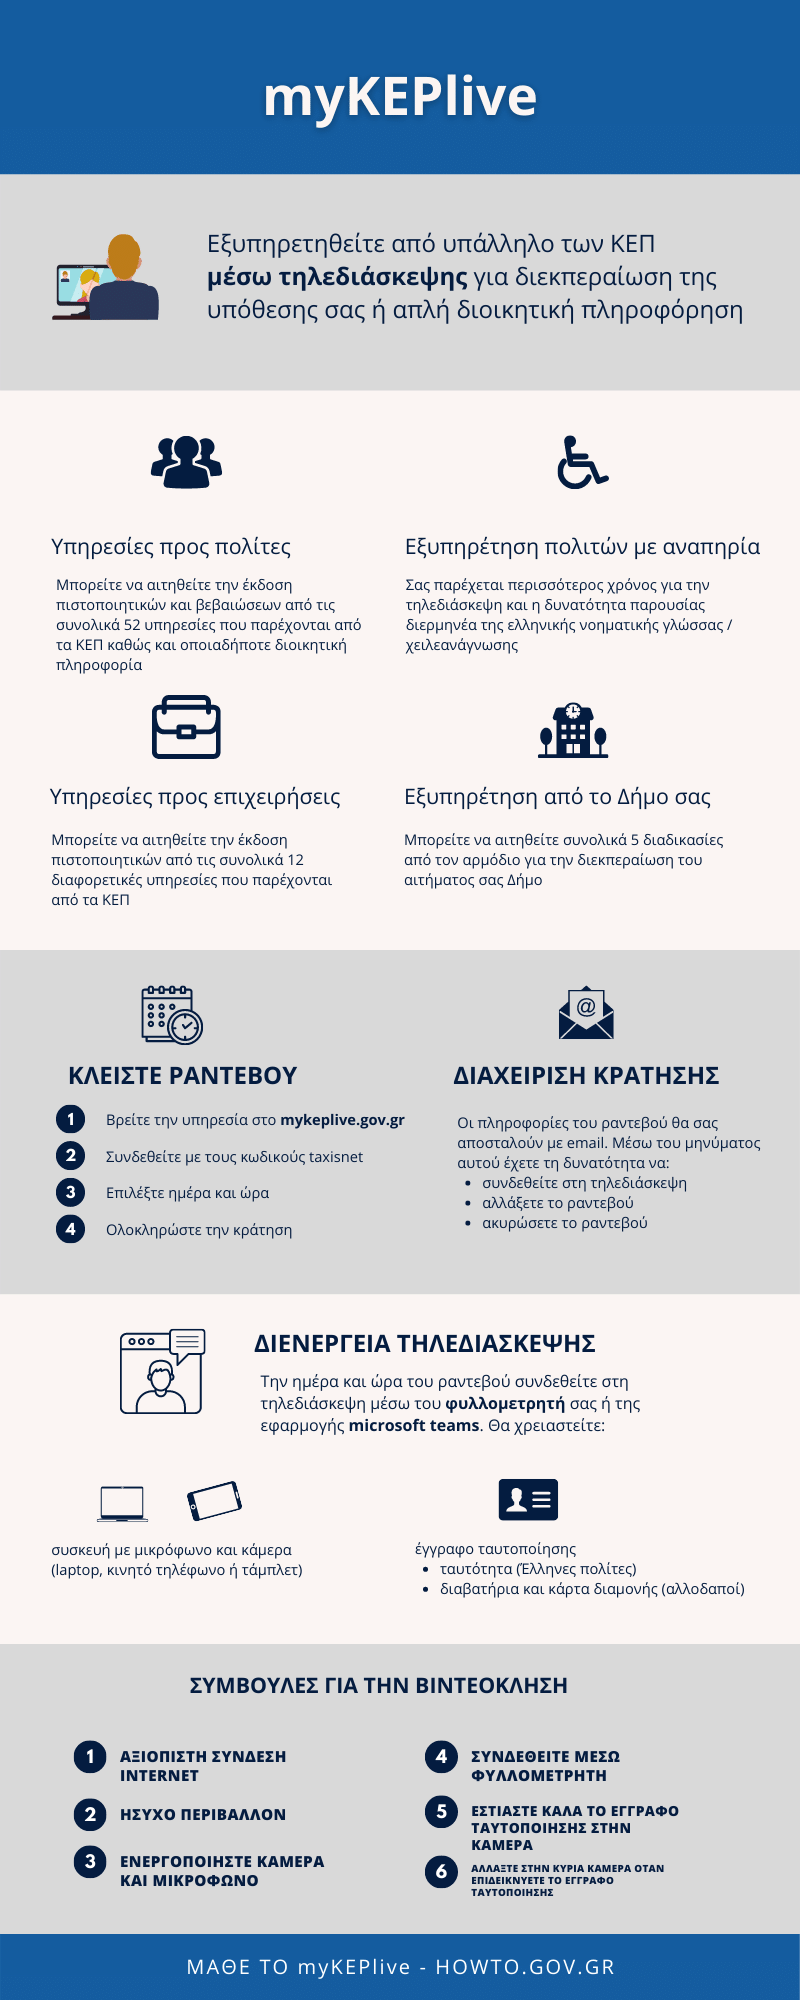 myKEPlive infographic